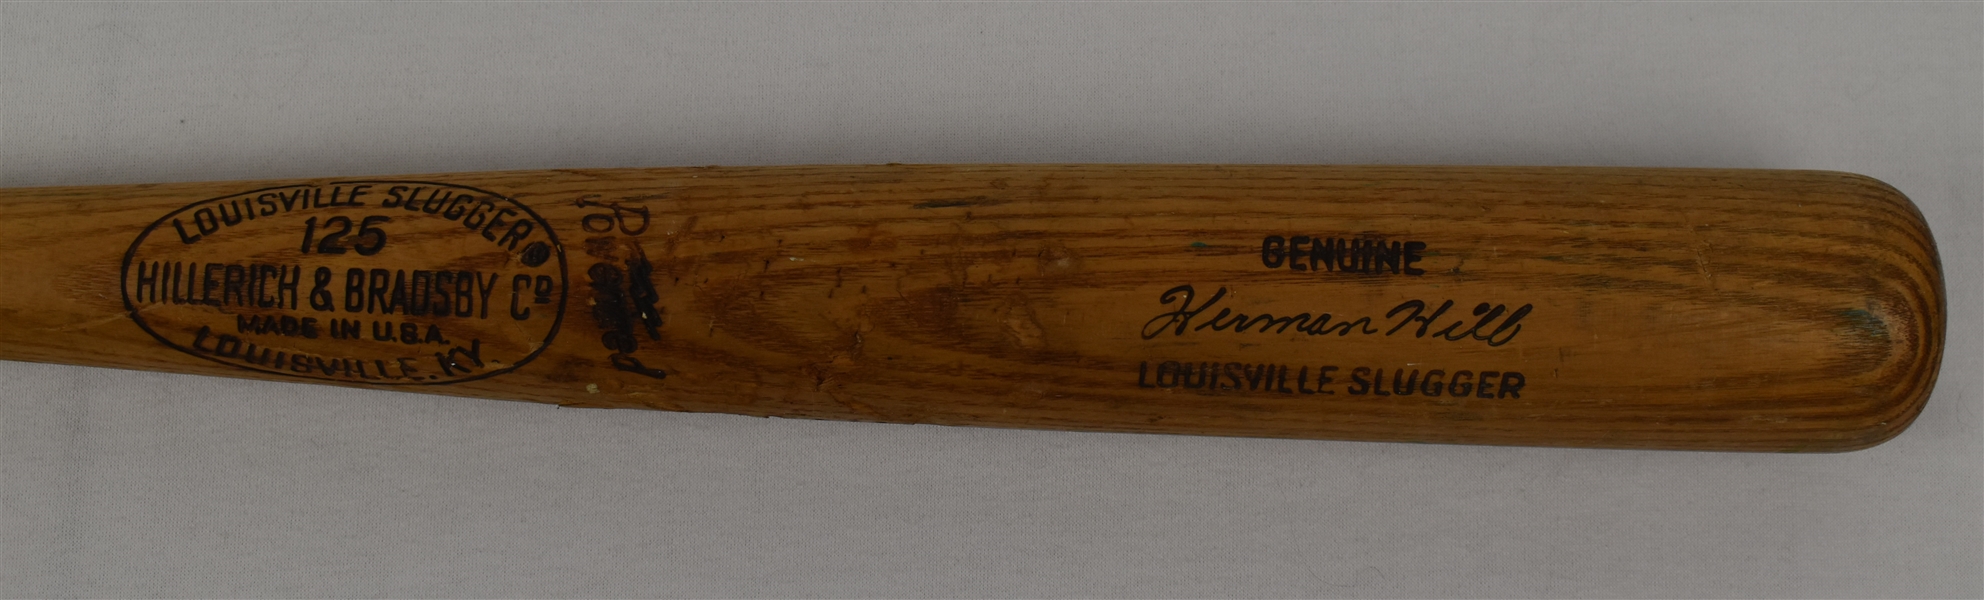 Herman Hill c. 1969-70 Minnesota Twins Game Used Bat